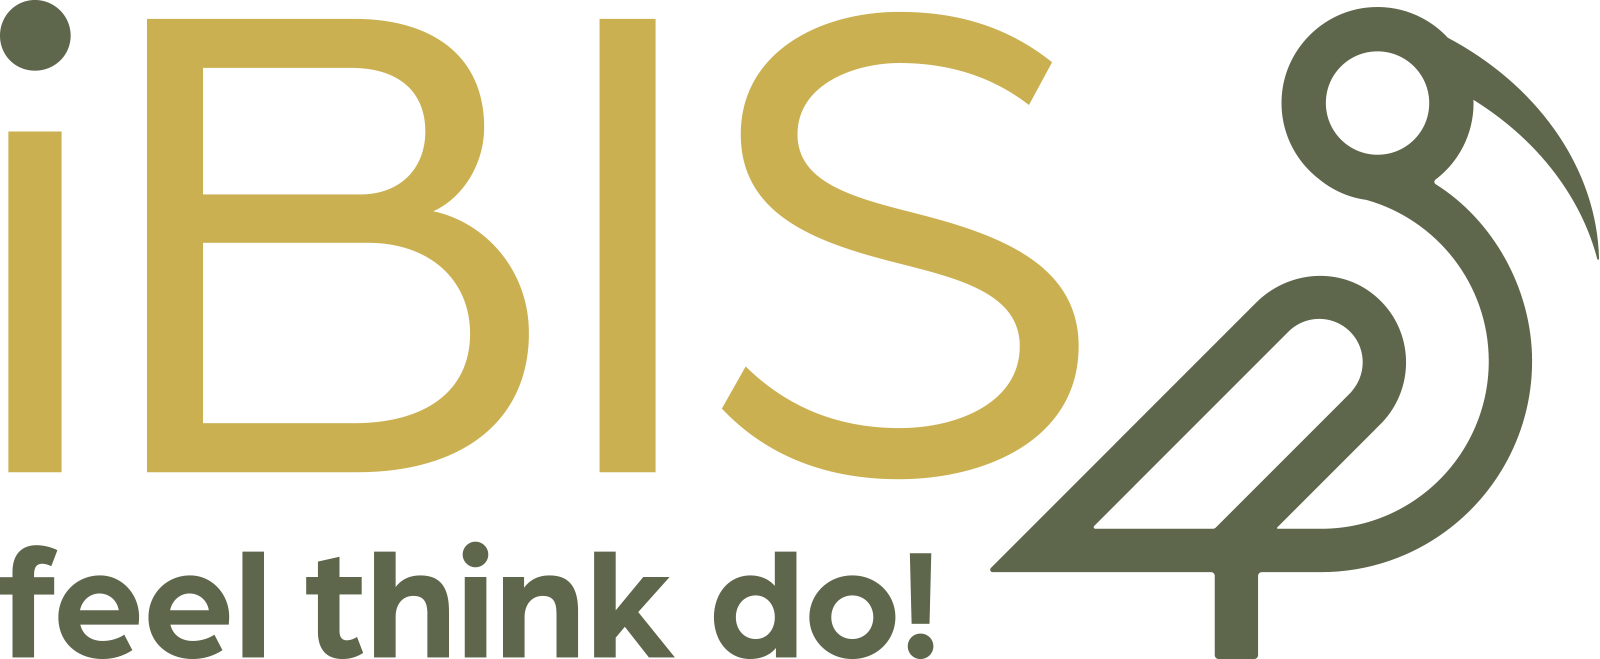 iBIS - Feel, Think, Do!